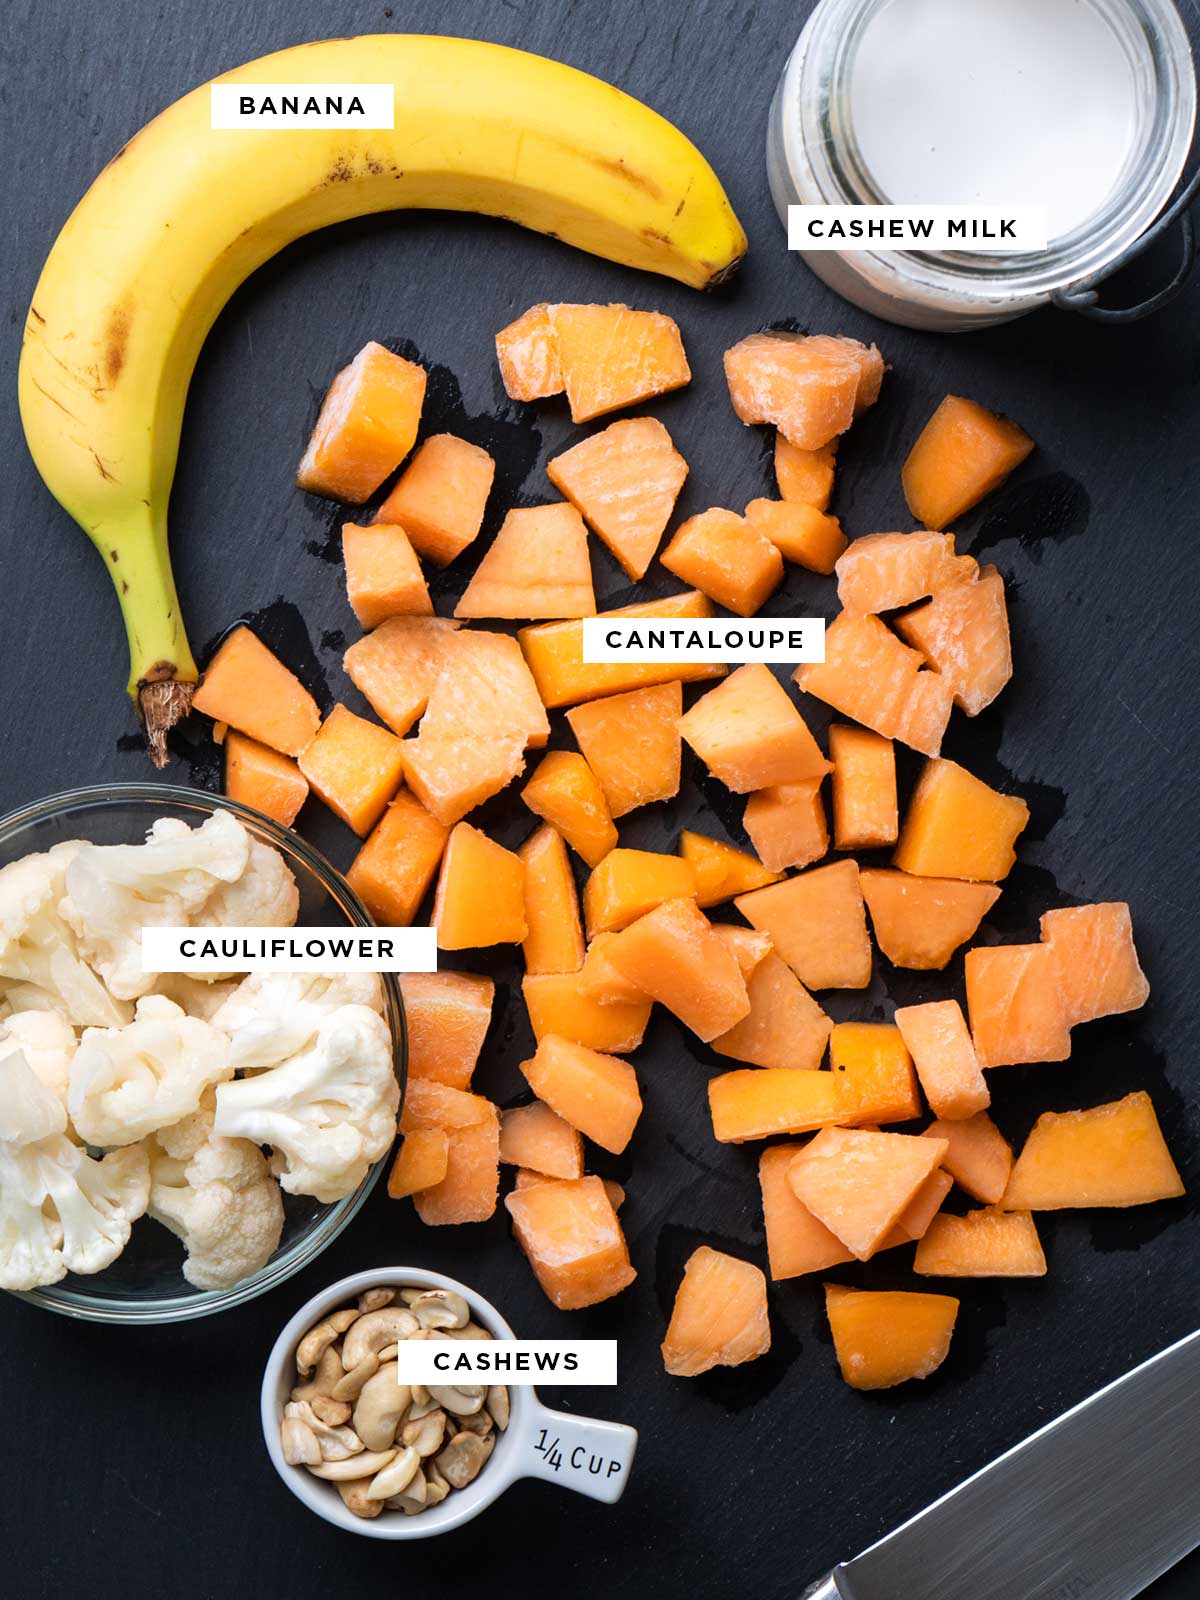 ingredients for a cantaloupe banana smoothie including banana, frozen cantaloupe, cauliflower, cashews and cashew milk.